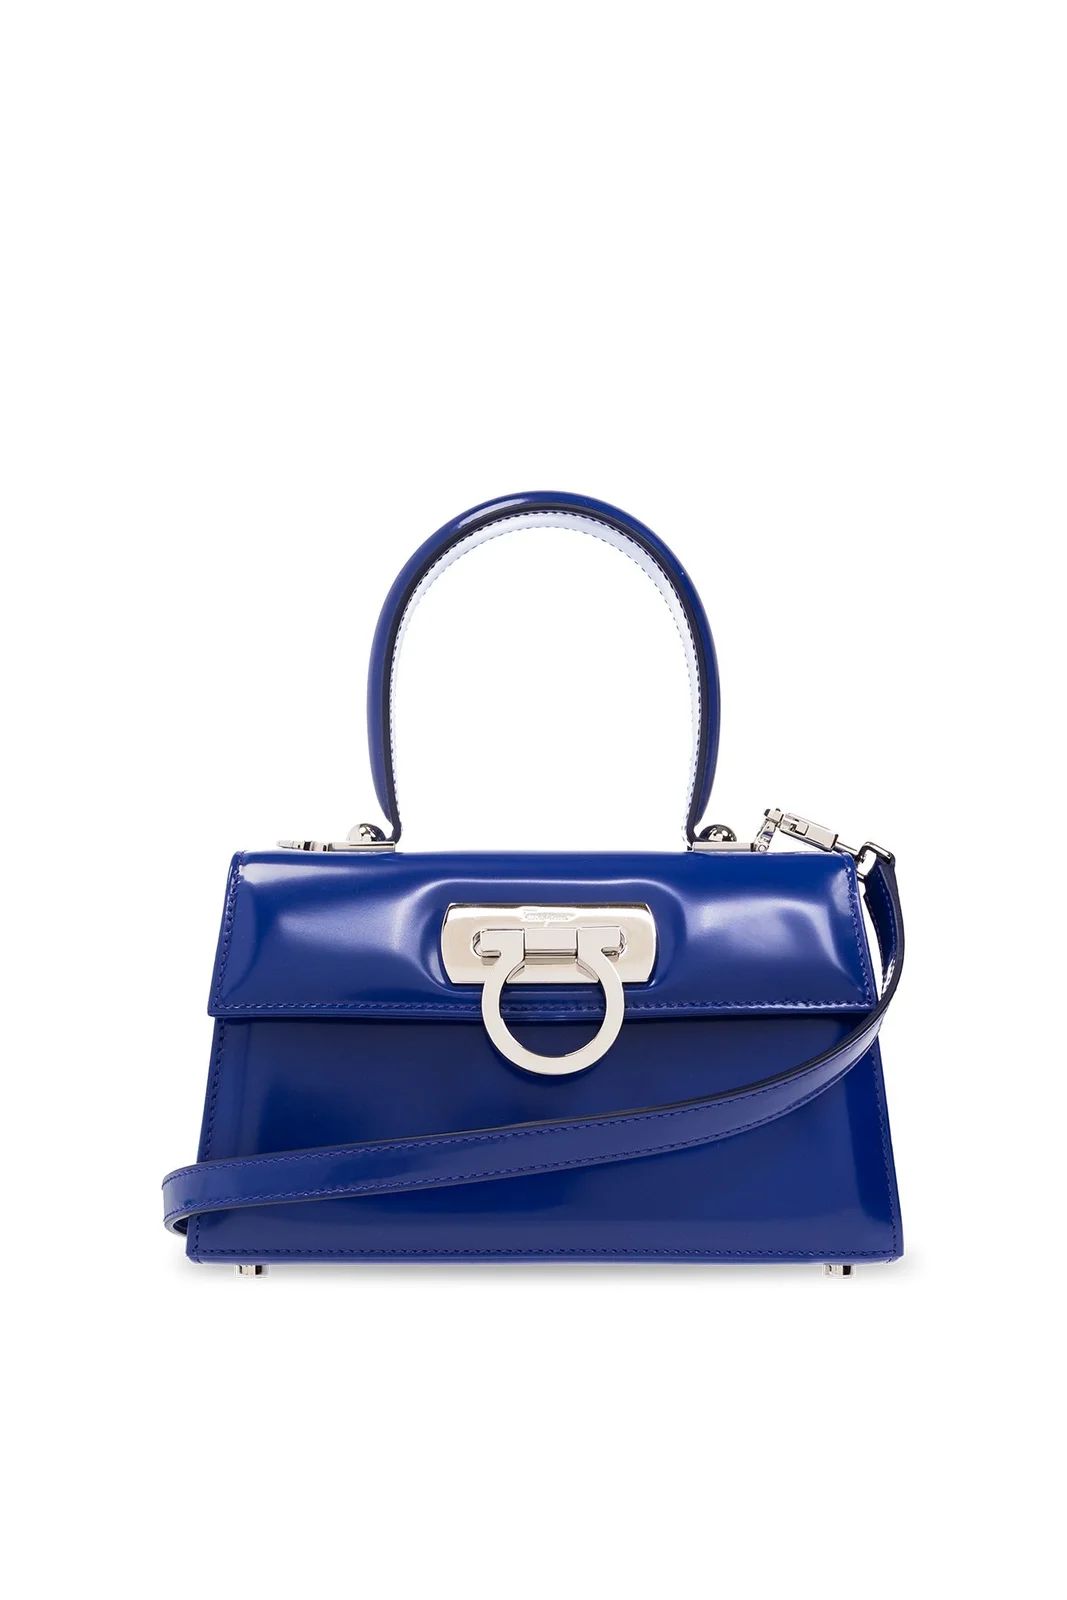 Salvatore Ferragamo Iconic Top Handle Bag | Cettire Global